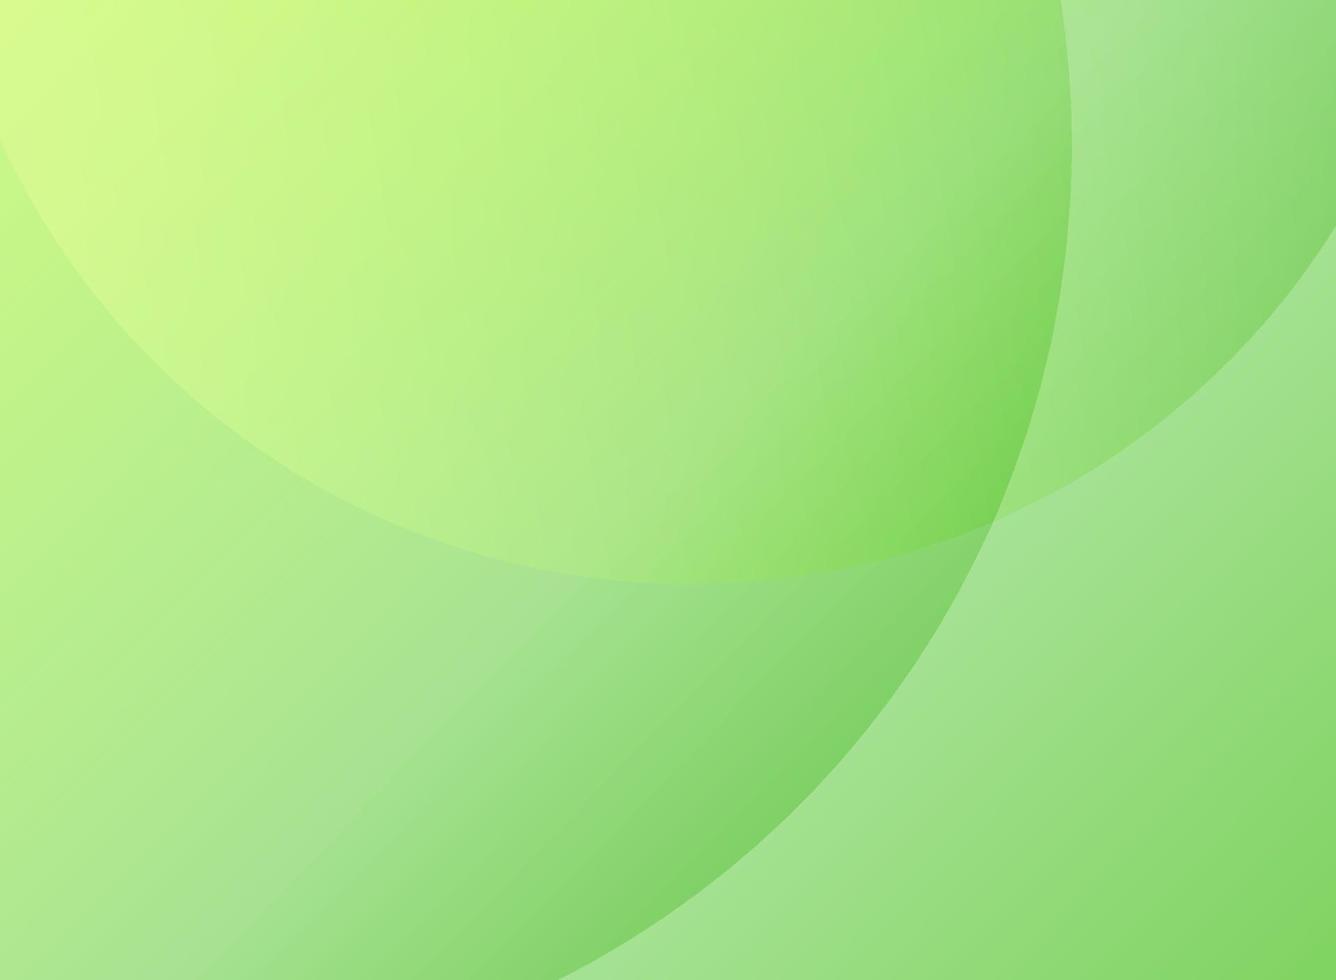 abstracte eenvoudige cirkels overlay groene kleur minimale moderne elegante achtergrond. vector